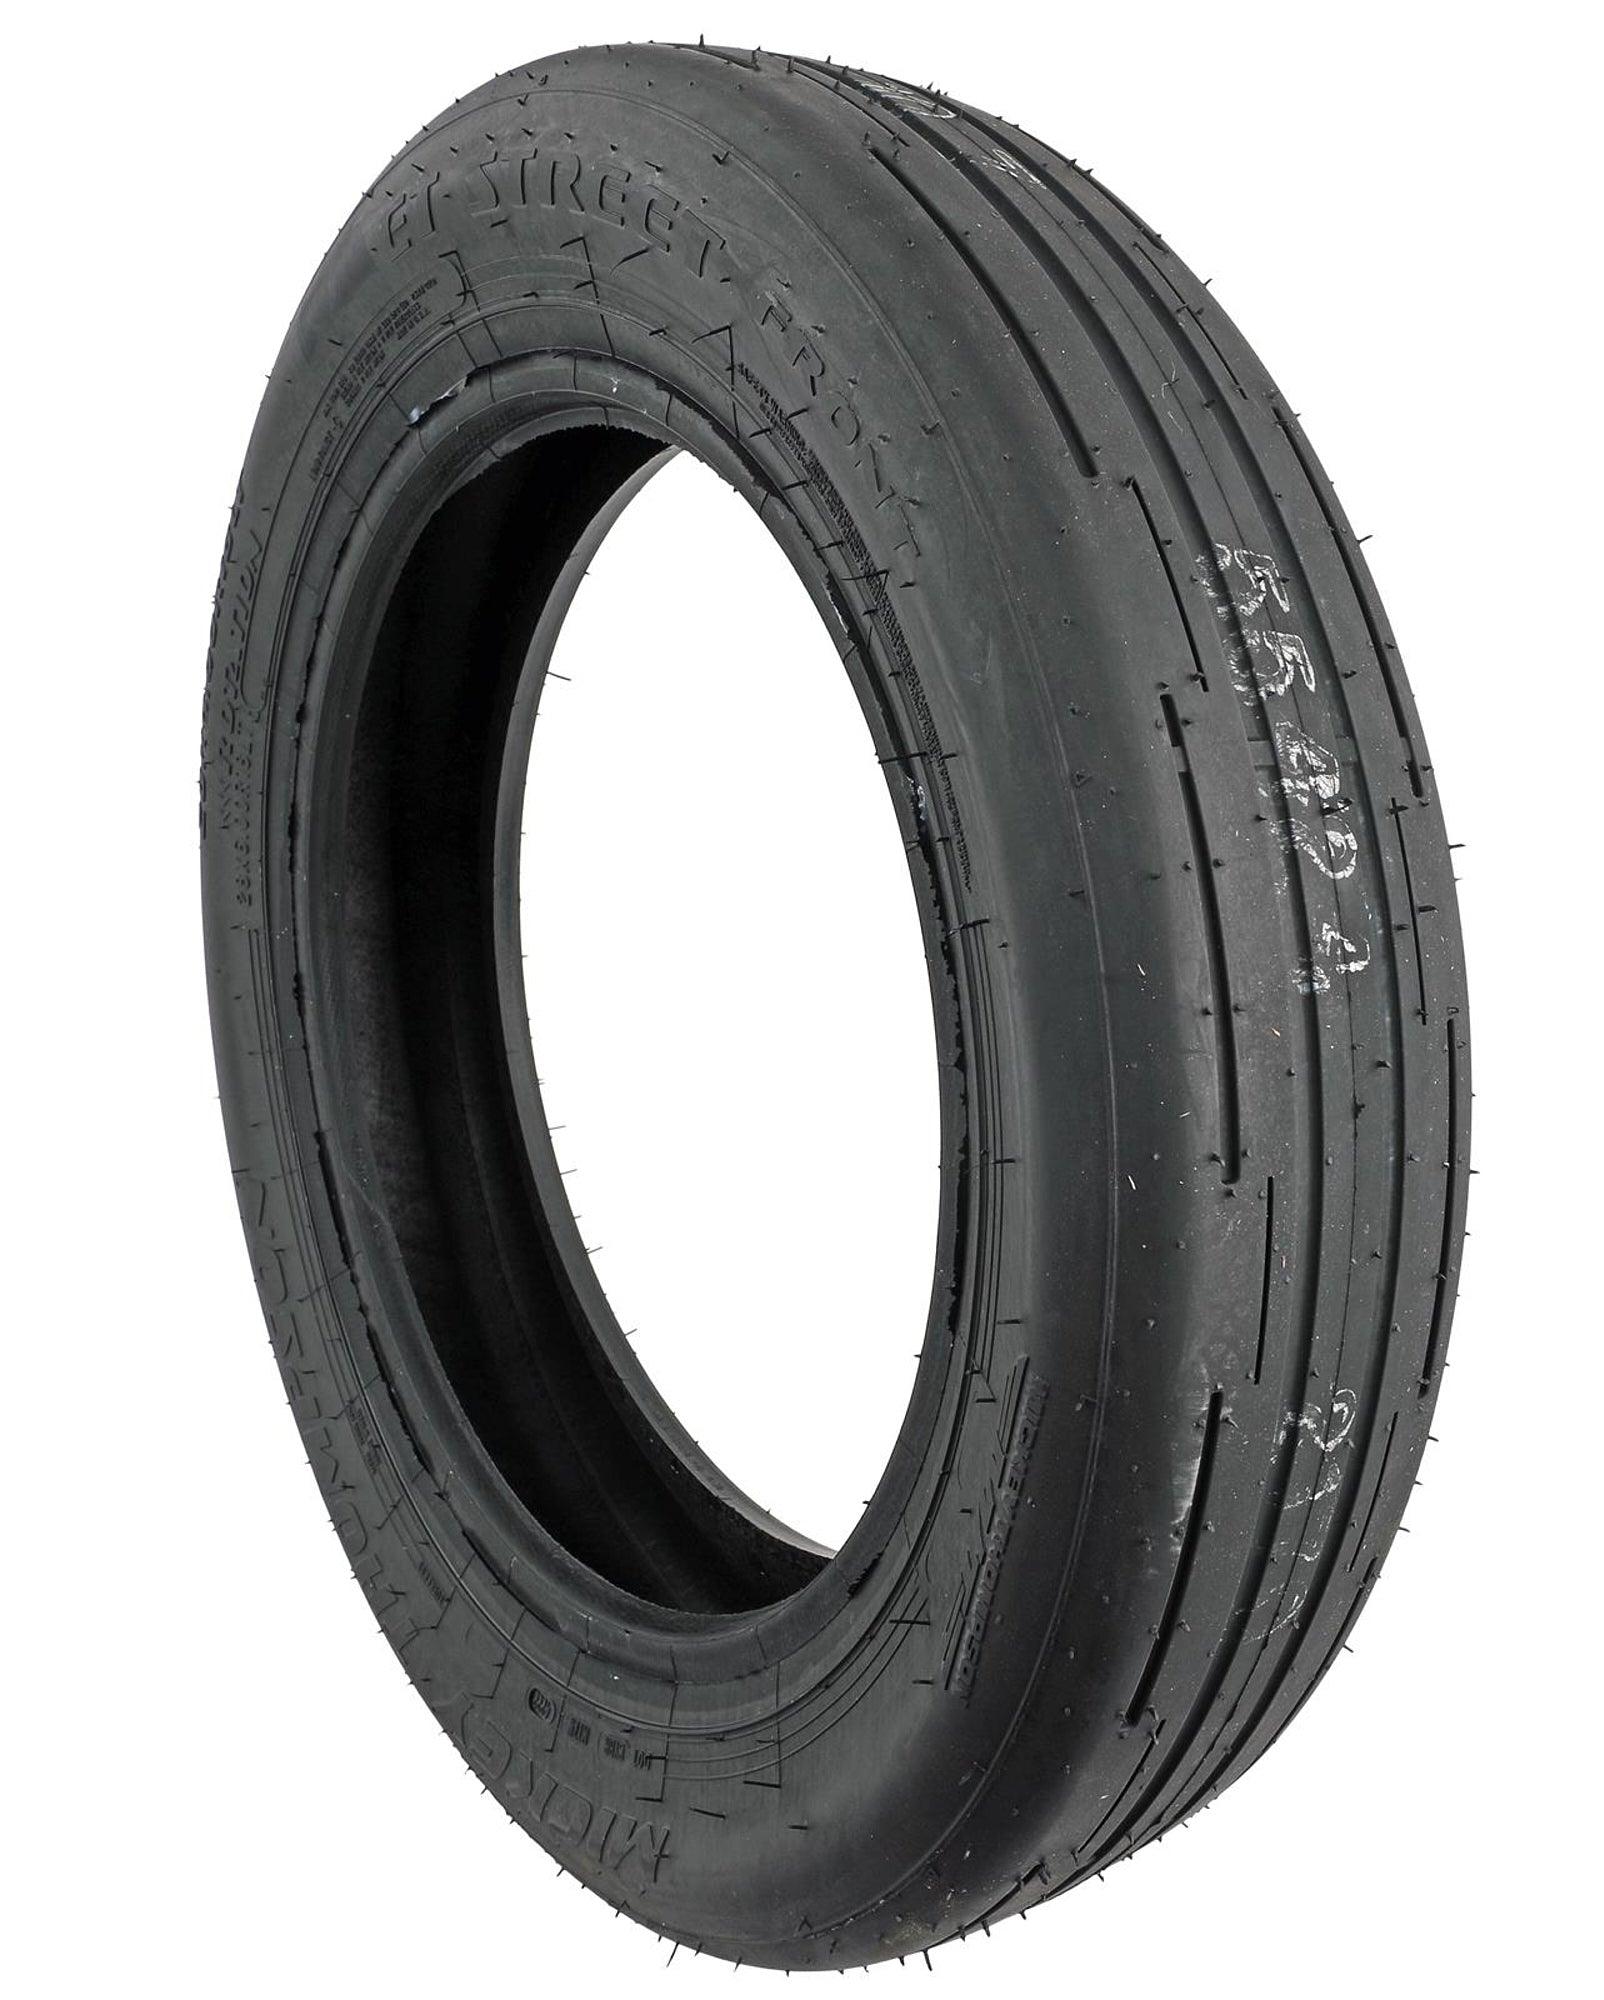 ET Sreet Radial Front Tire 28x6.00R18LT - Burlile Performance Products